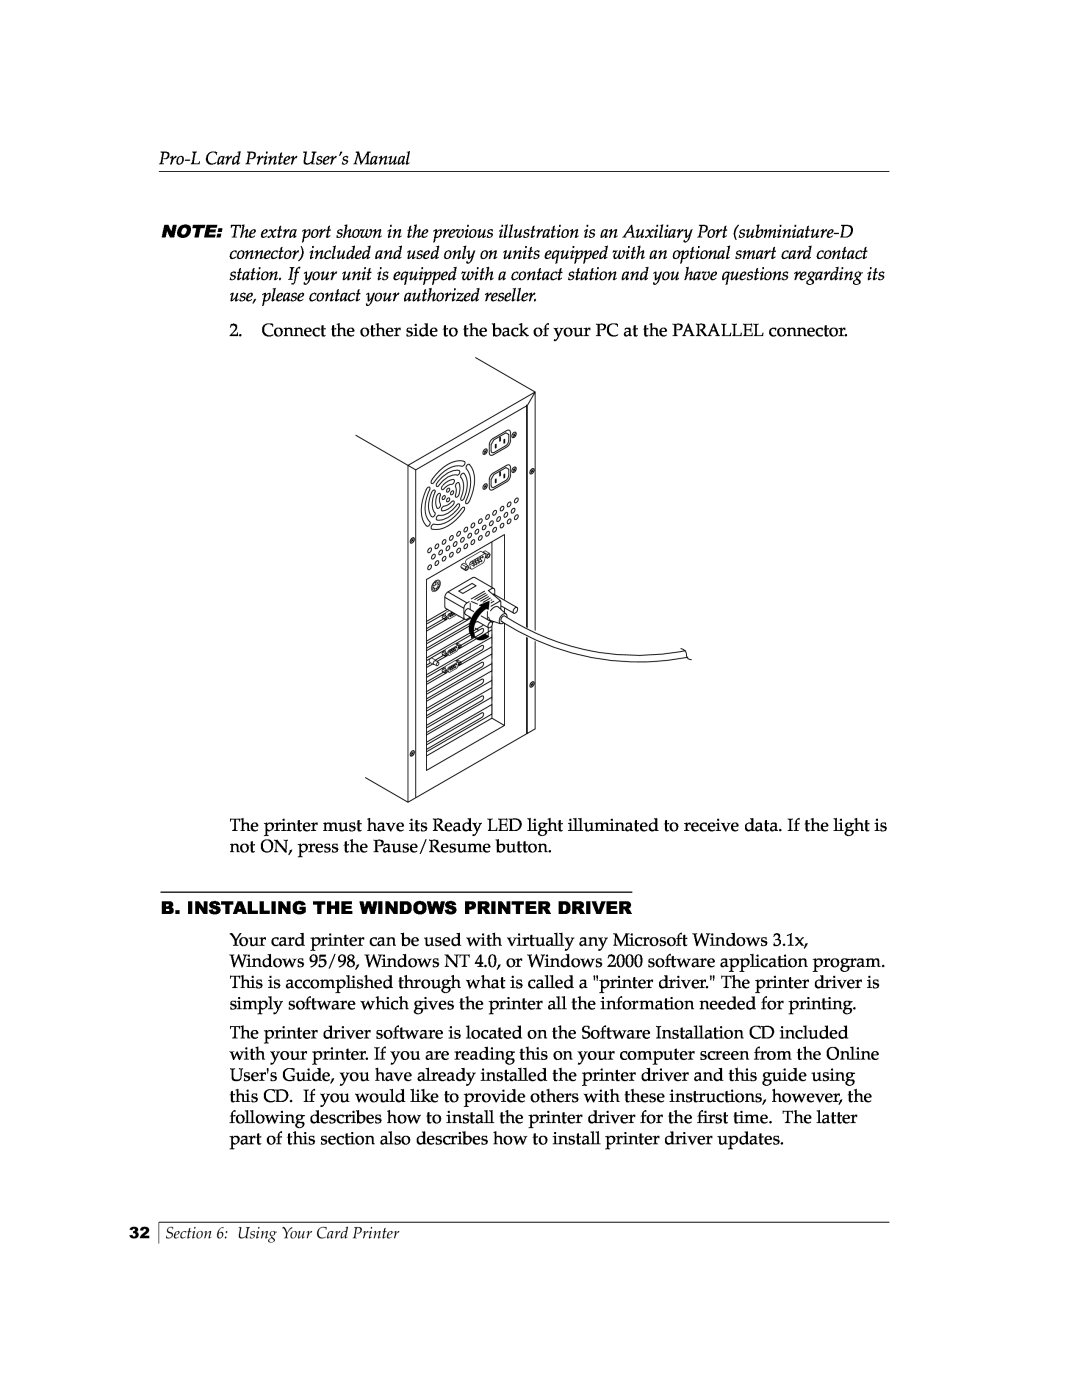 FARGO electronic Pro-L manual B. Installing The Windows Printer Driver, Using Your Card Printer 